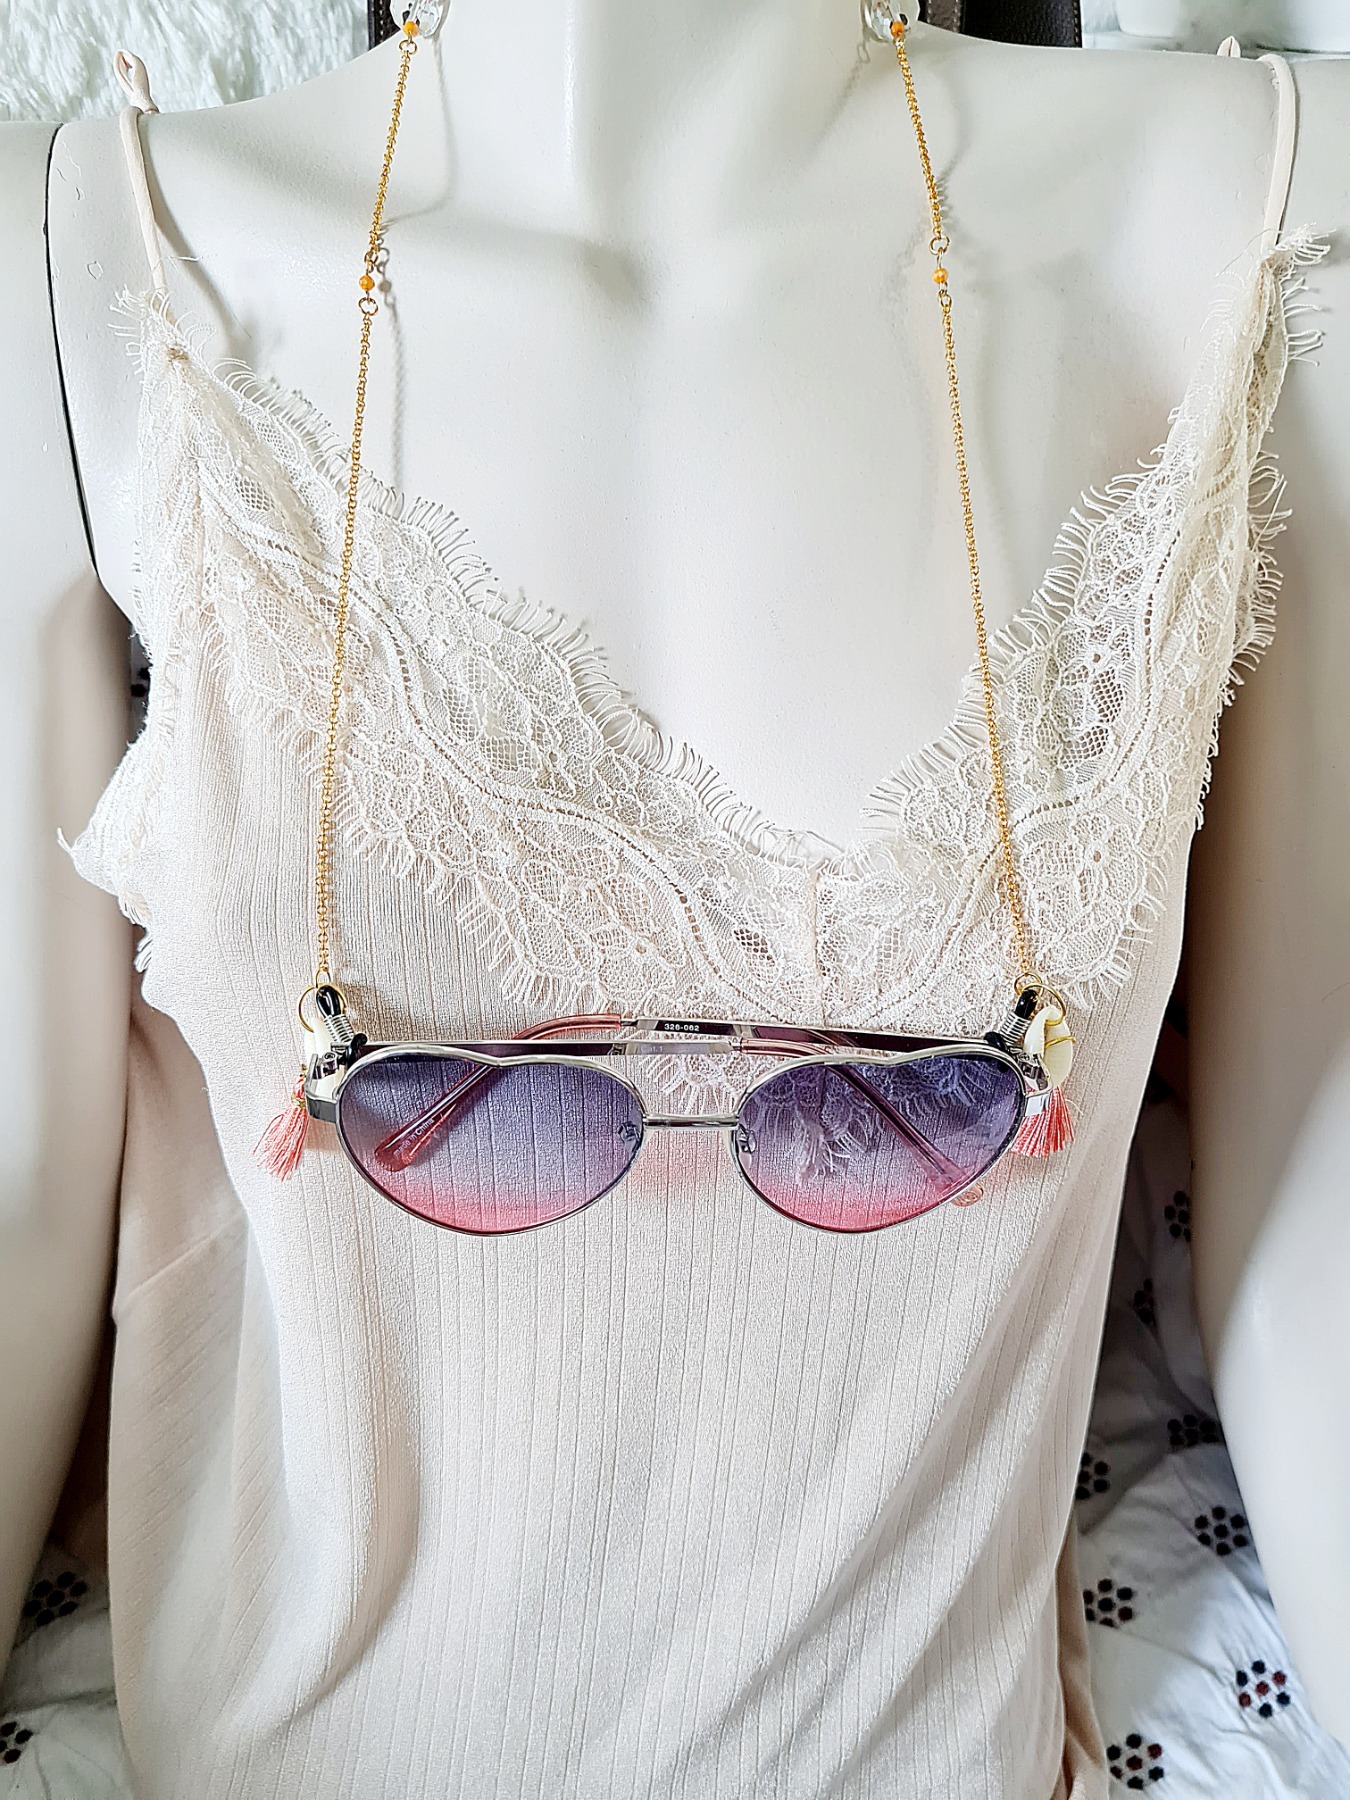 Brillenketten Quasten Muscheln Perlen Sommer-Accessoire 8